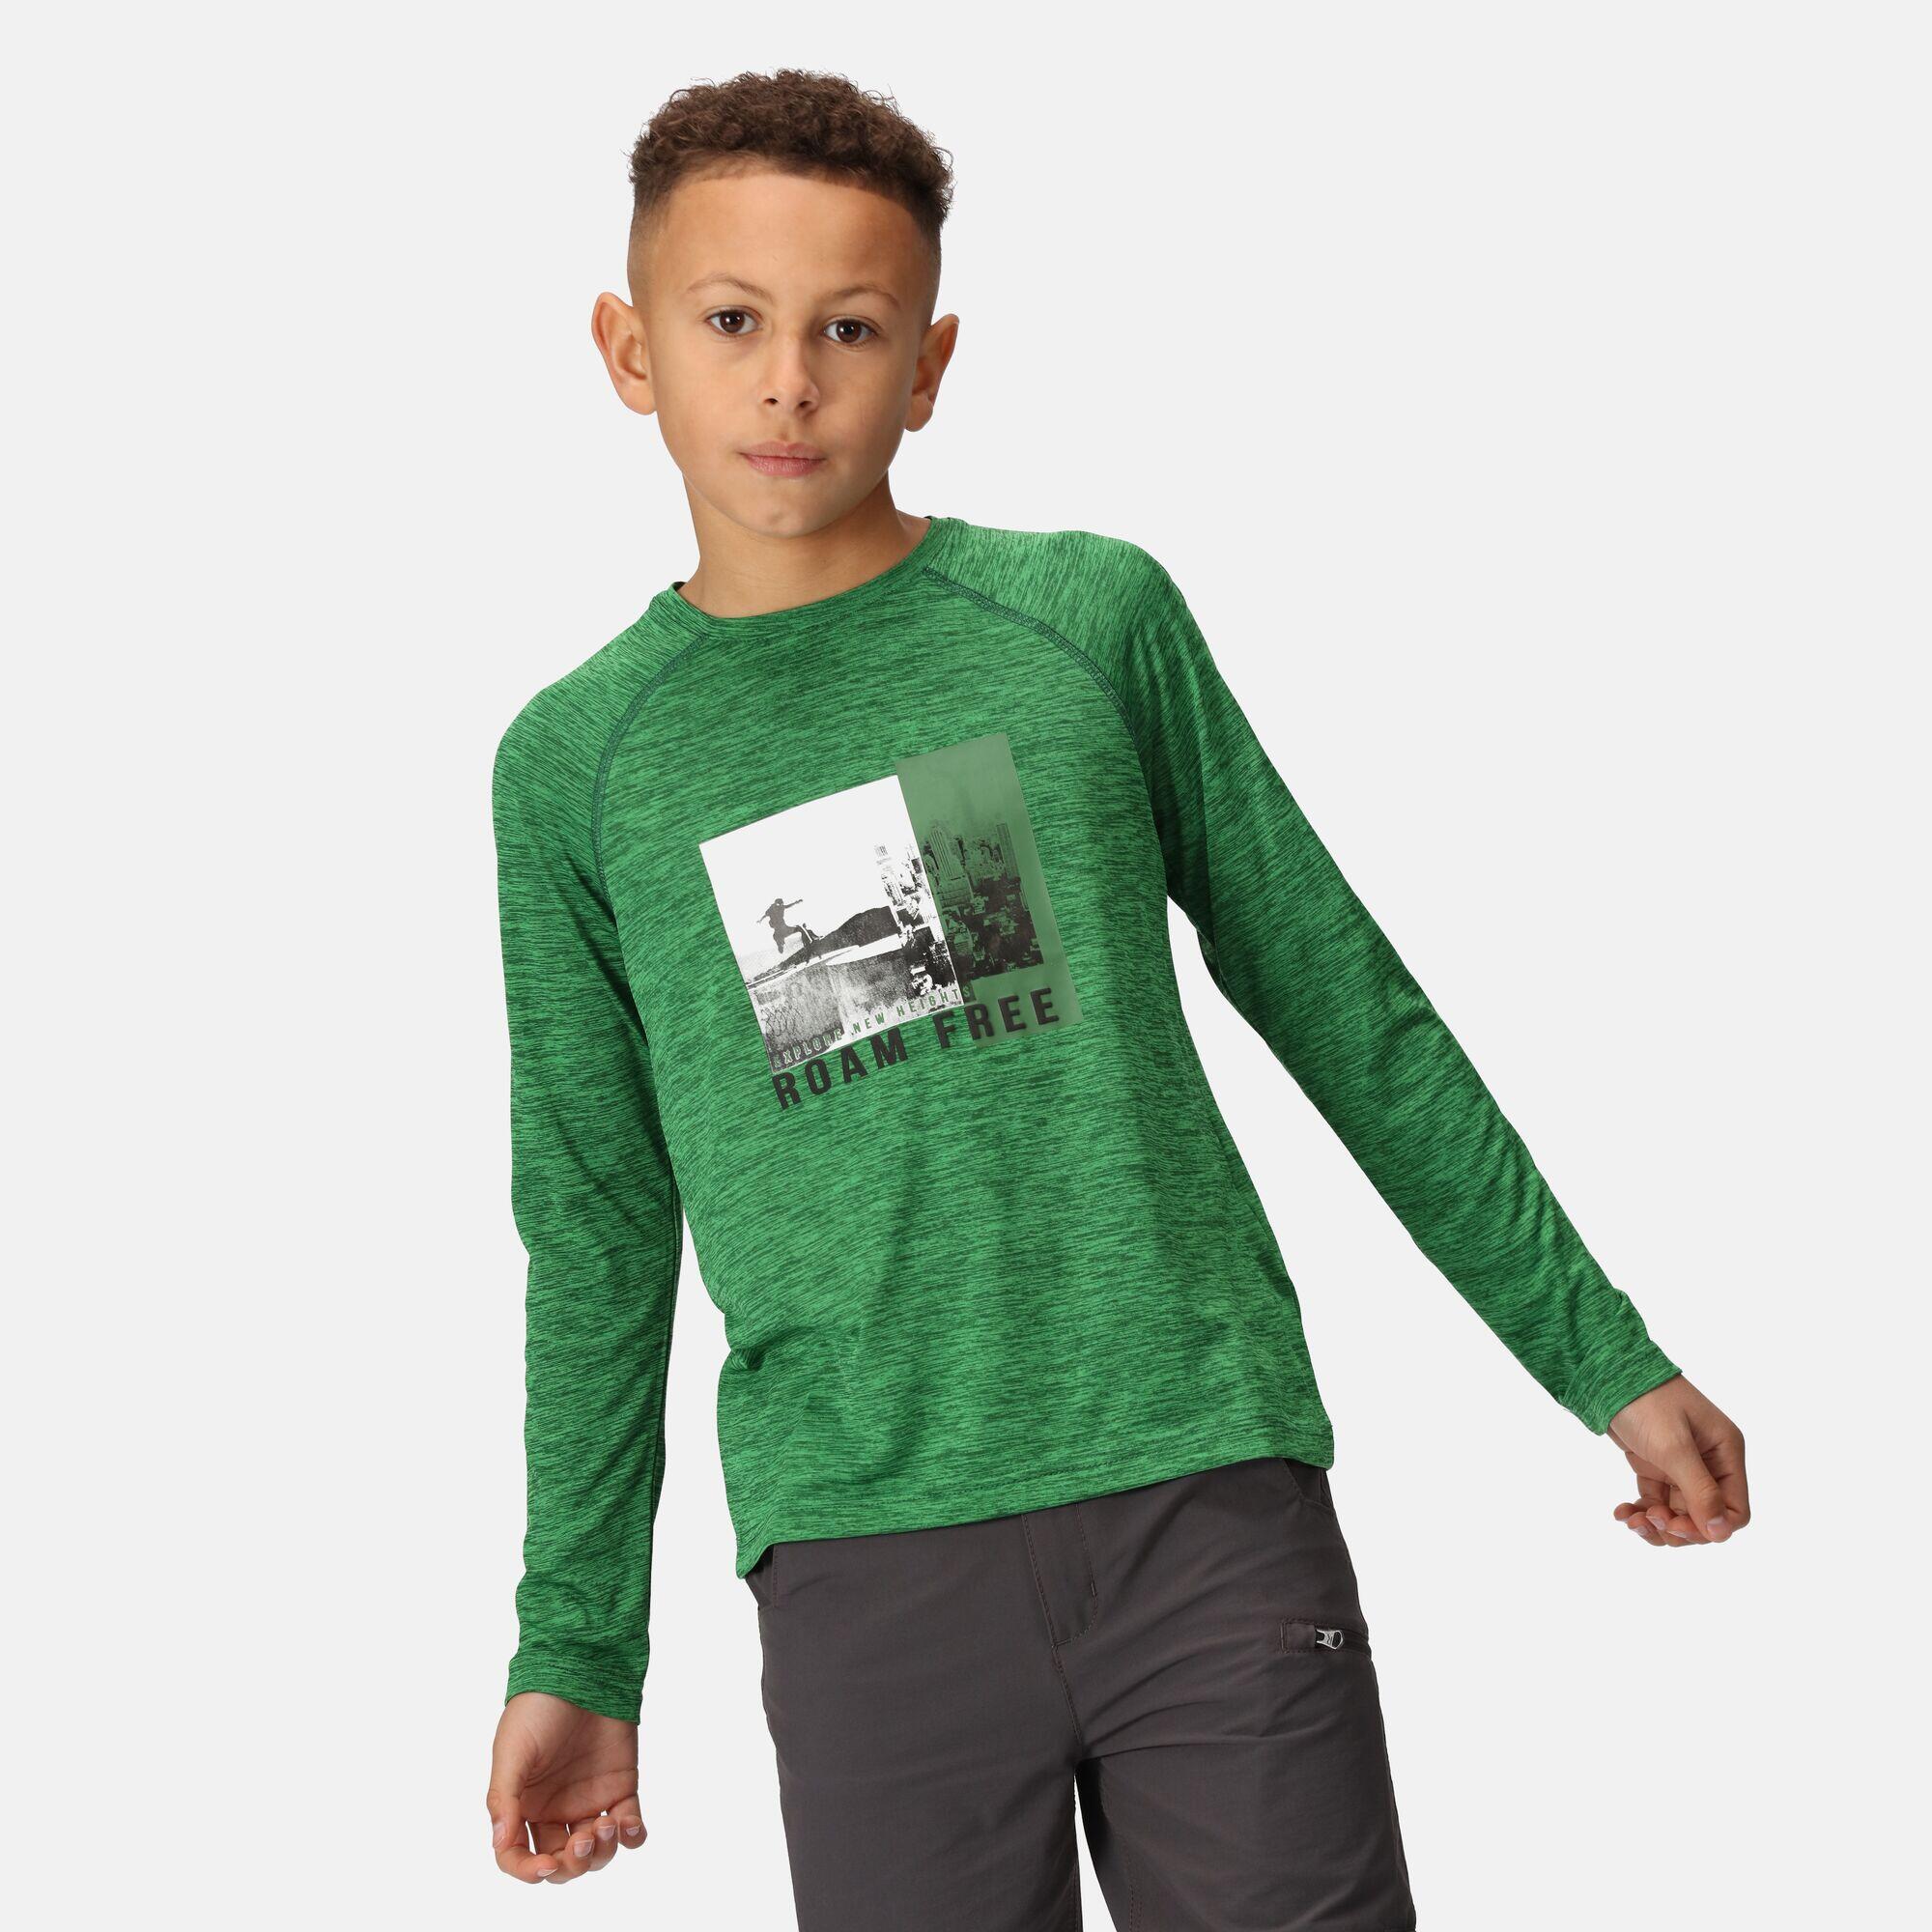 Burnlee Kids' Graphic Walking T-Shirt 1/5